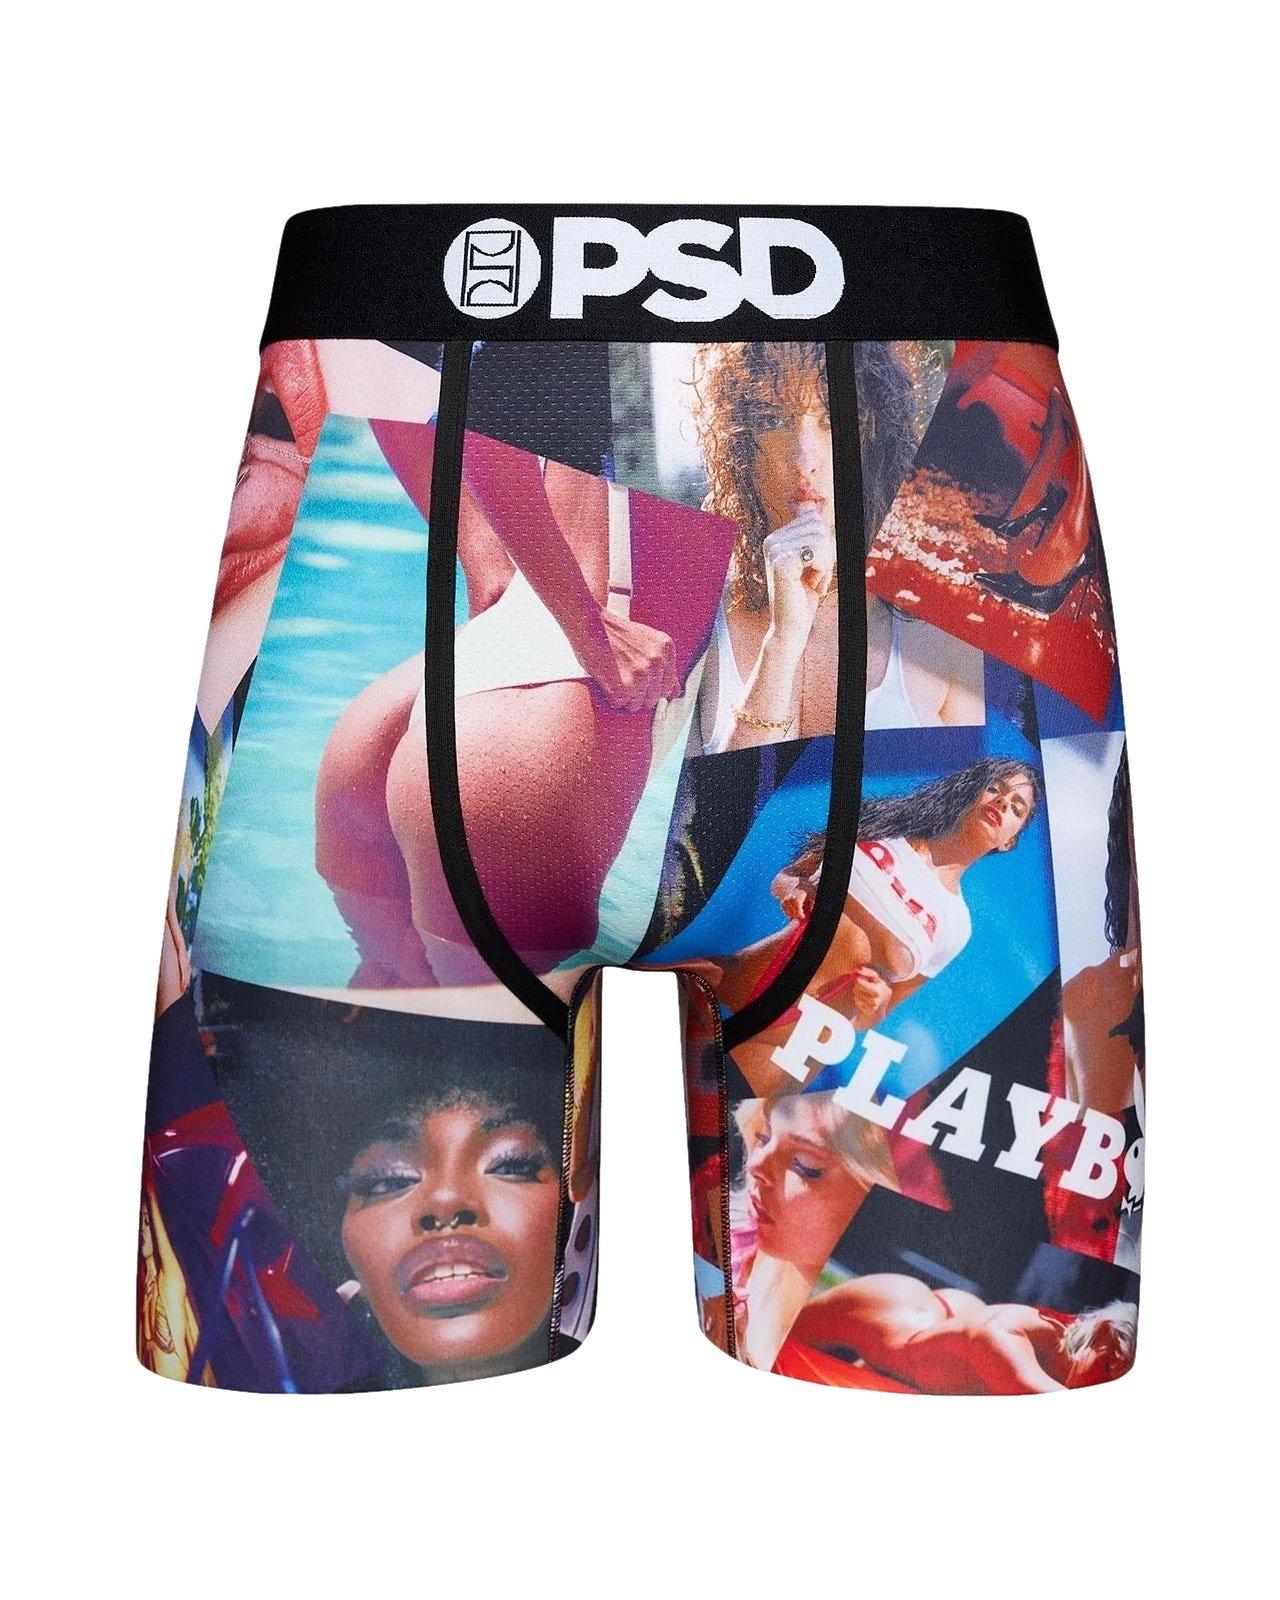 PSD Men's Playboy Moods Underwear